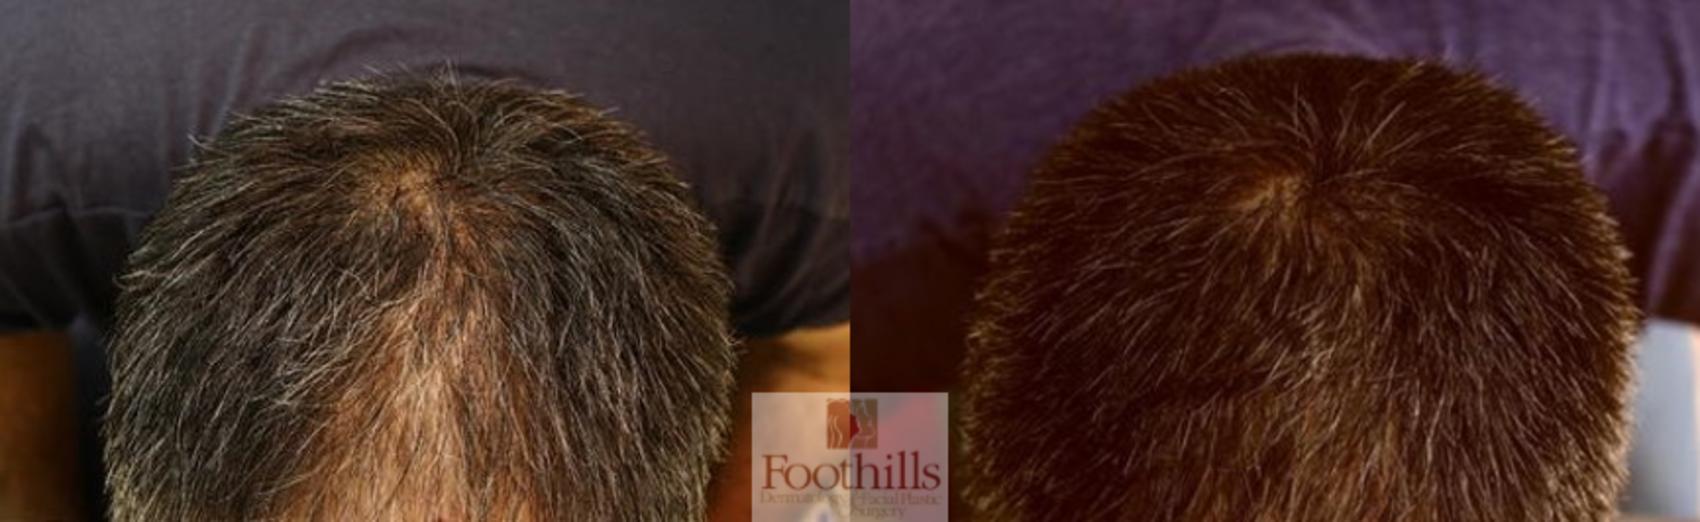 PRP Hair Restoration Case 125 Before & After View #1 | Tucson, AZ | Foothills Facial Plastic Surgery